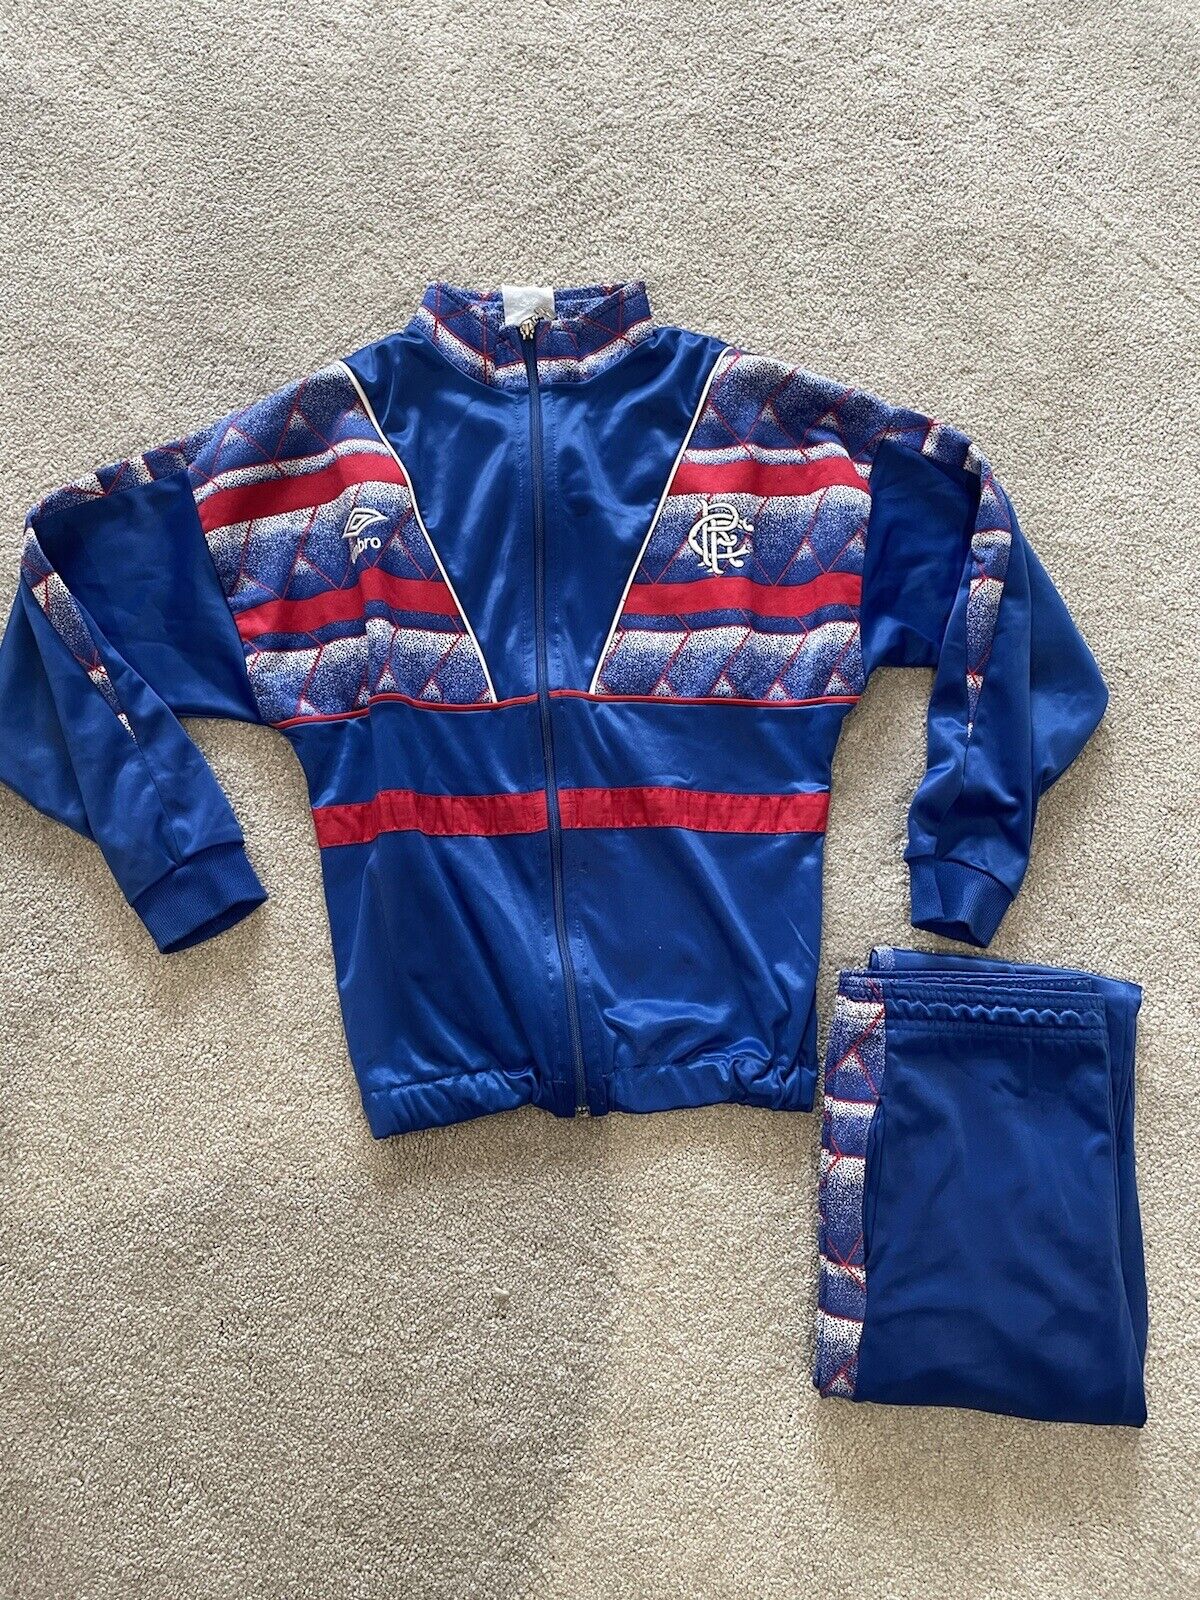 Glasgow Rangers Original 1987 tracksuit jacket 30-32